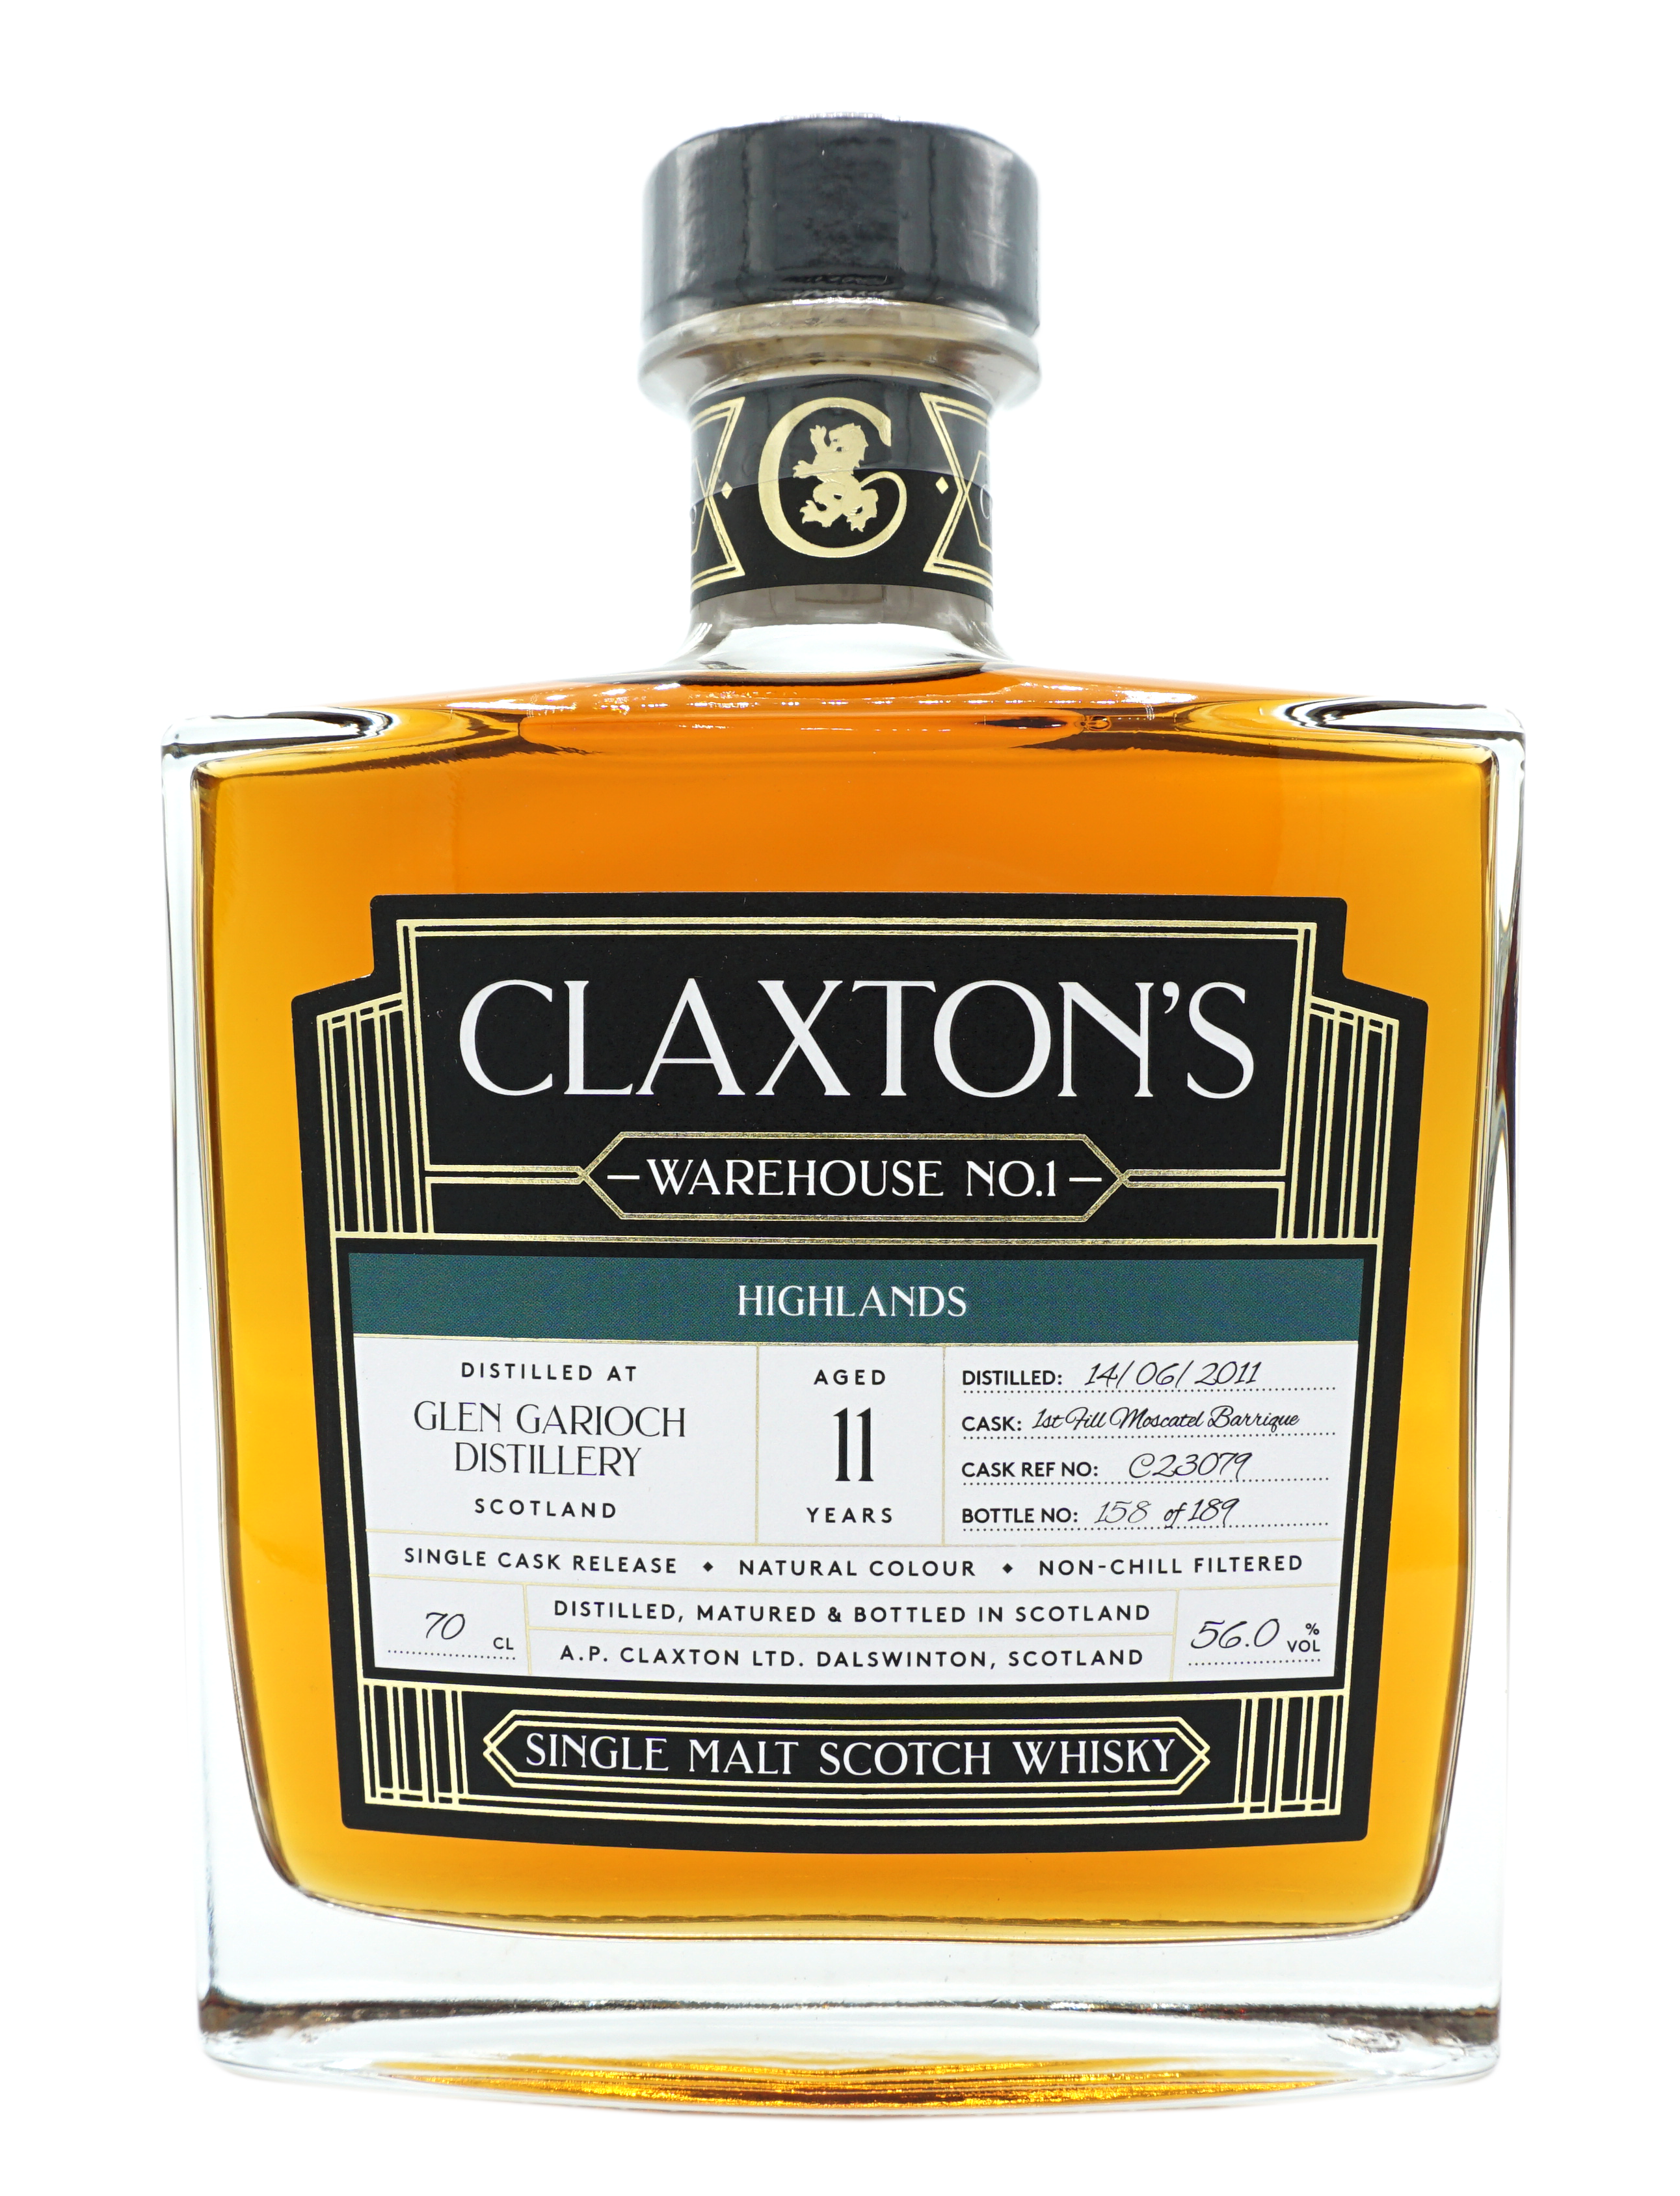 Claxton’s WarehouseNo1 Highlands 11y 56% Fles